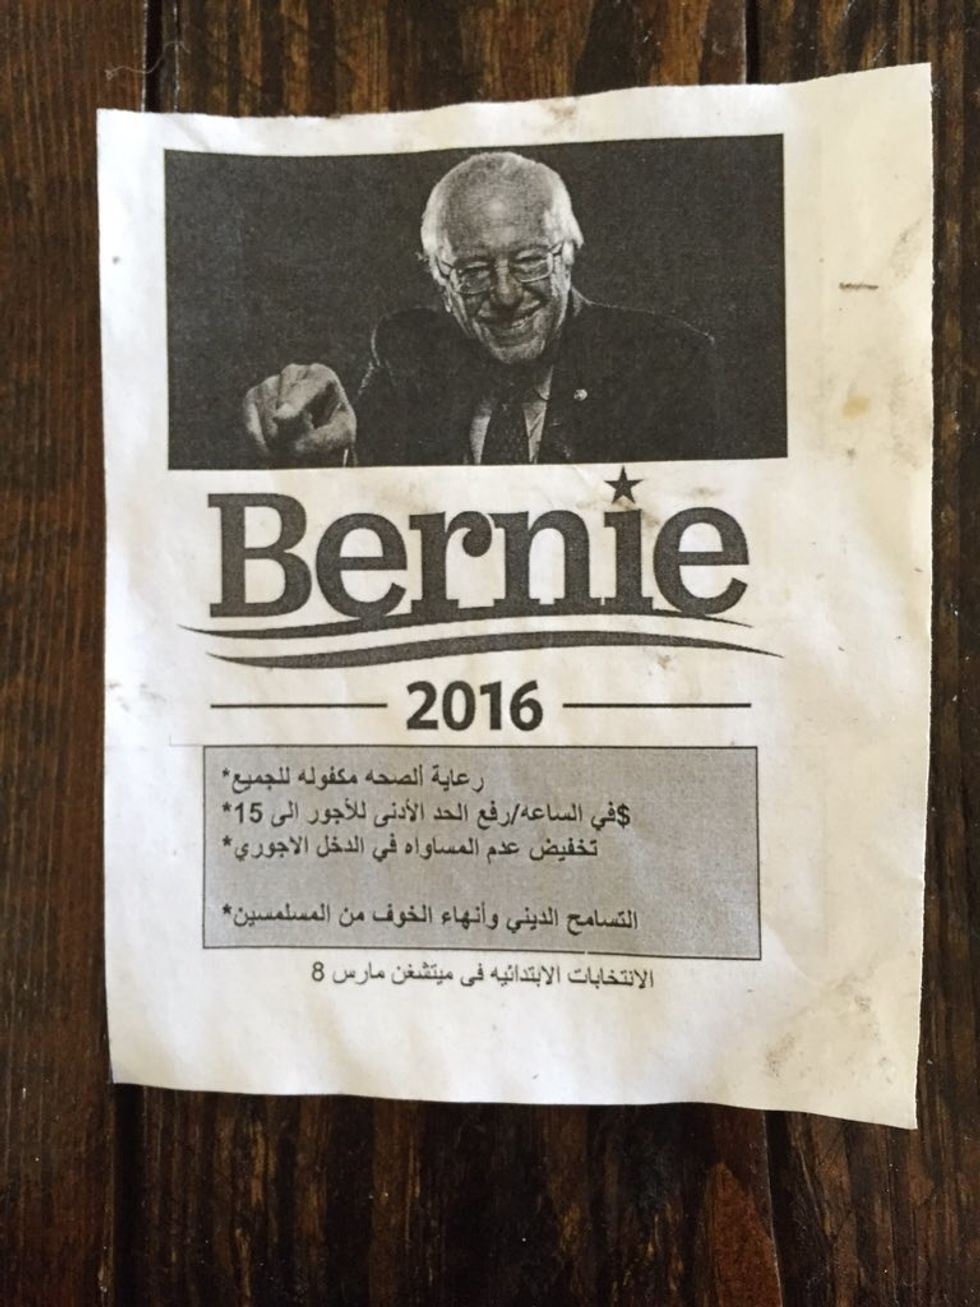 Sanders Releases Radio Ad In Arabic Before Michigan Primary